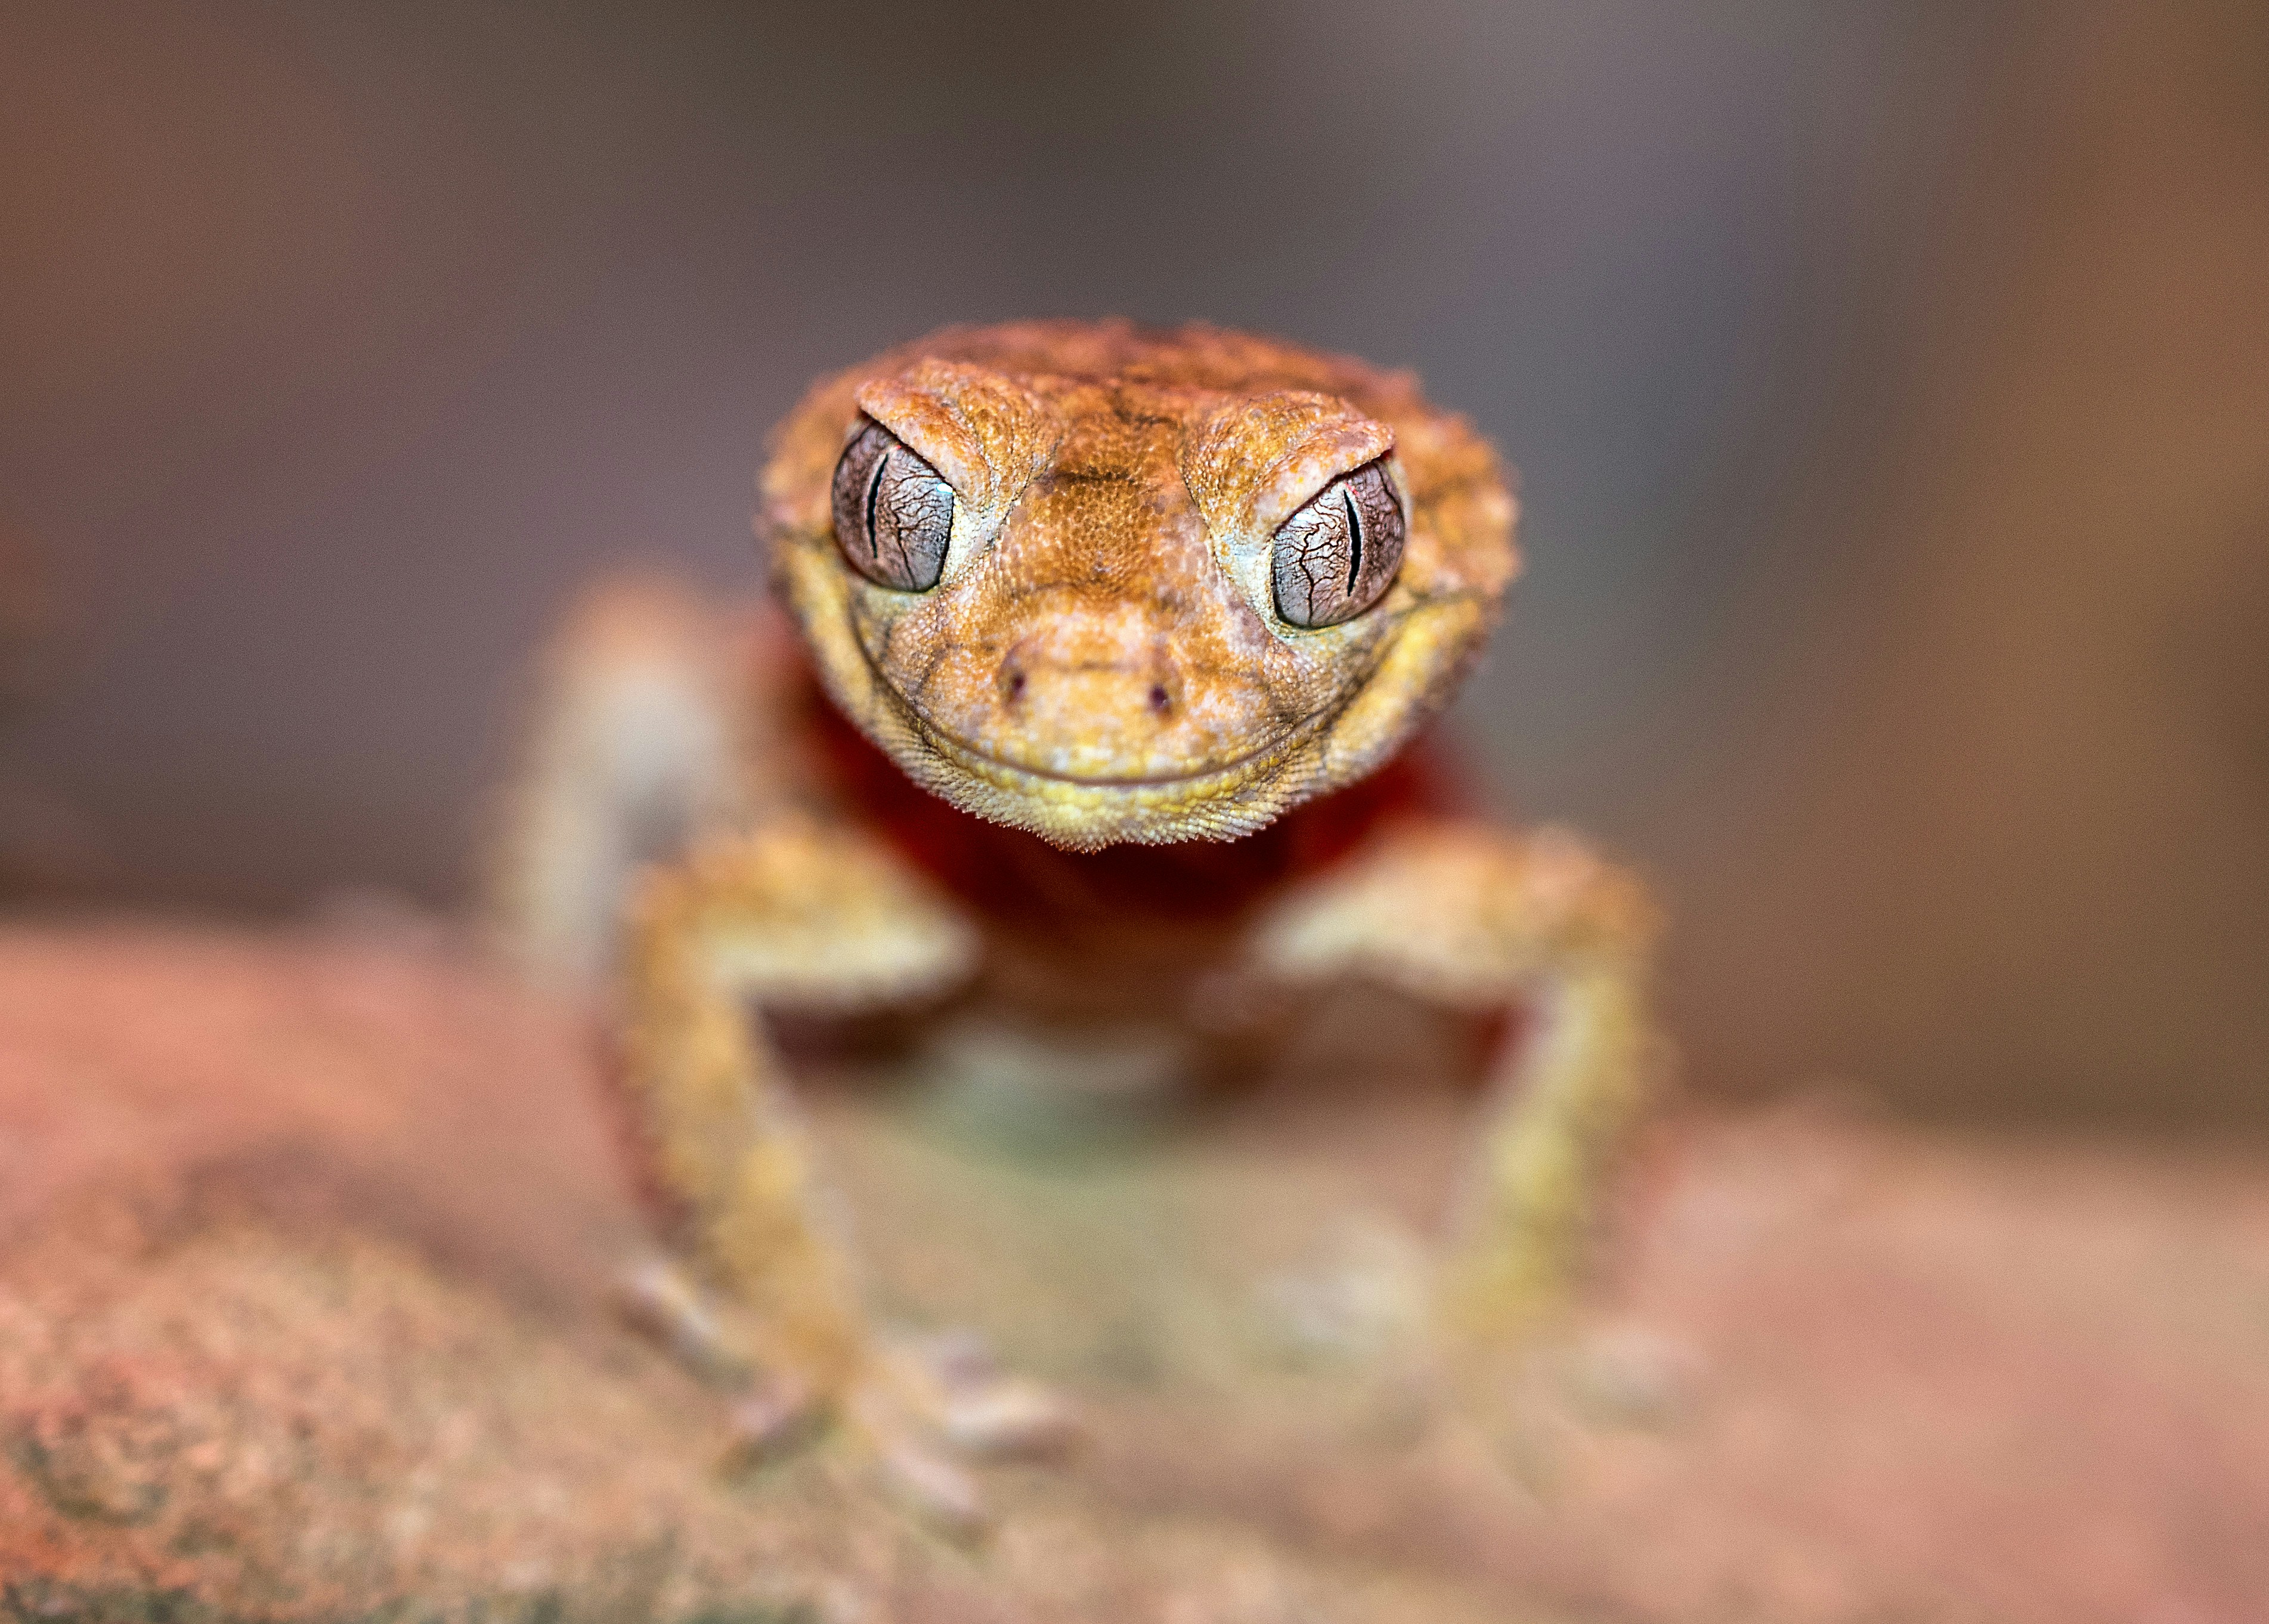 The Lifespan of Geckos: How Long Do They Live?